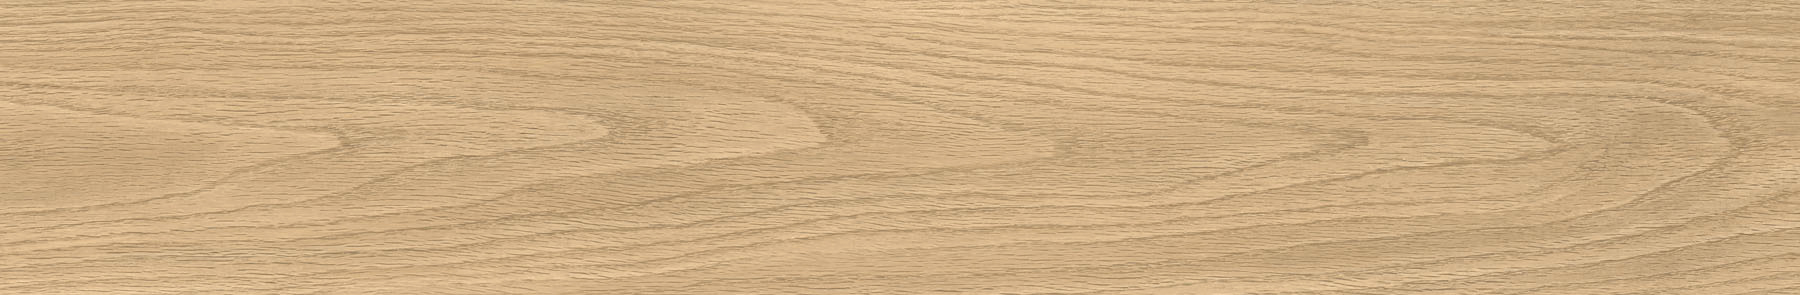 EW1483-15 川島織物セルコン 床タイル エグザウッド ブレッザオーク 川島織物セルコン フロアタイル